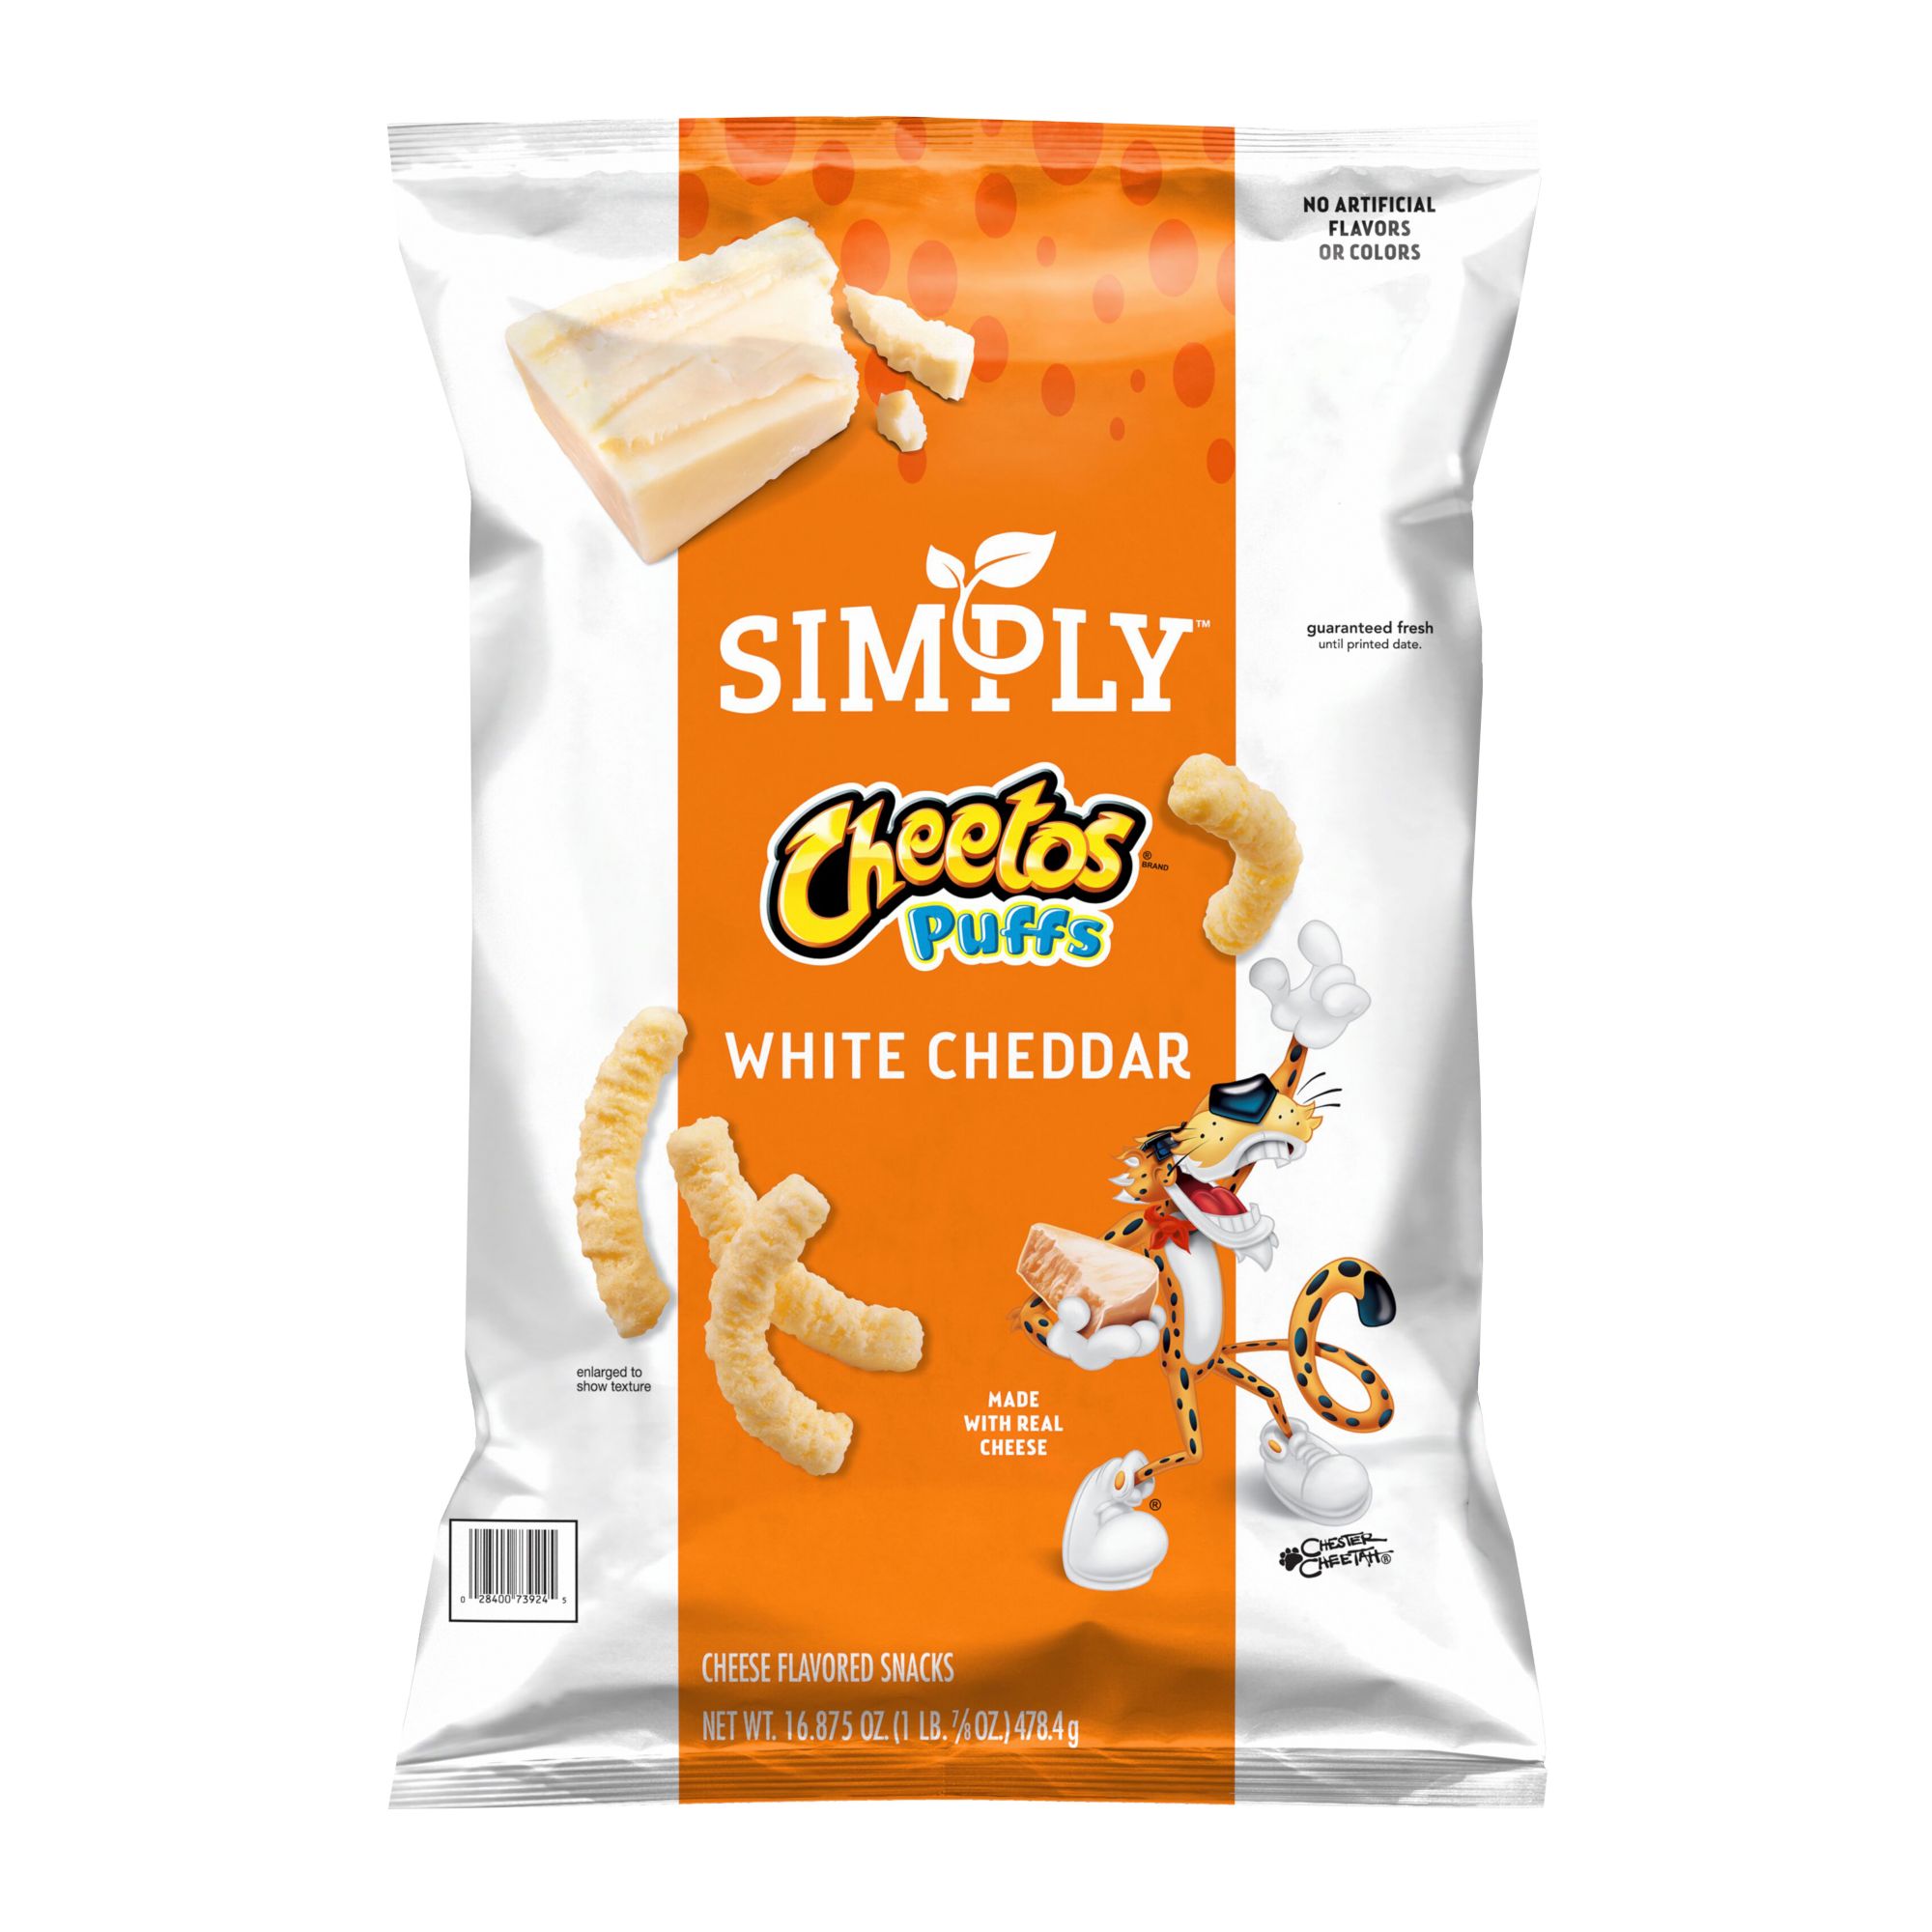 Simply Cheetos Puffs White Cheddar Cheese Snacks, 16.875 oz.